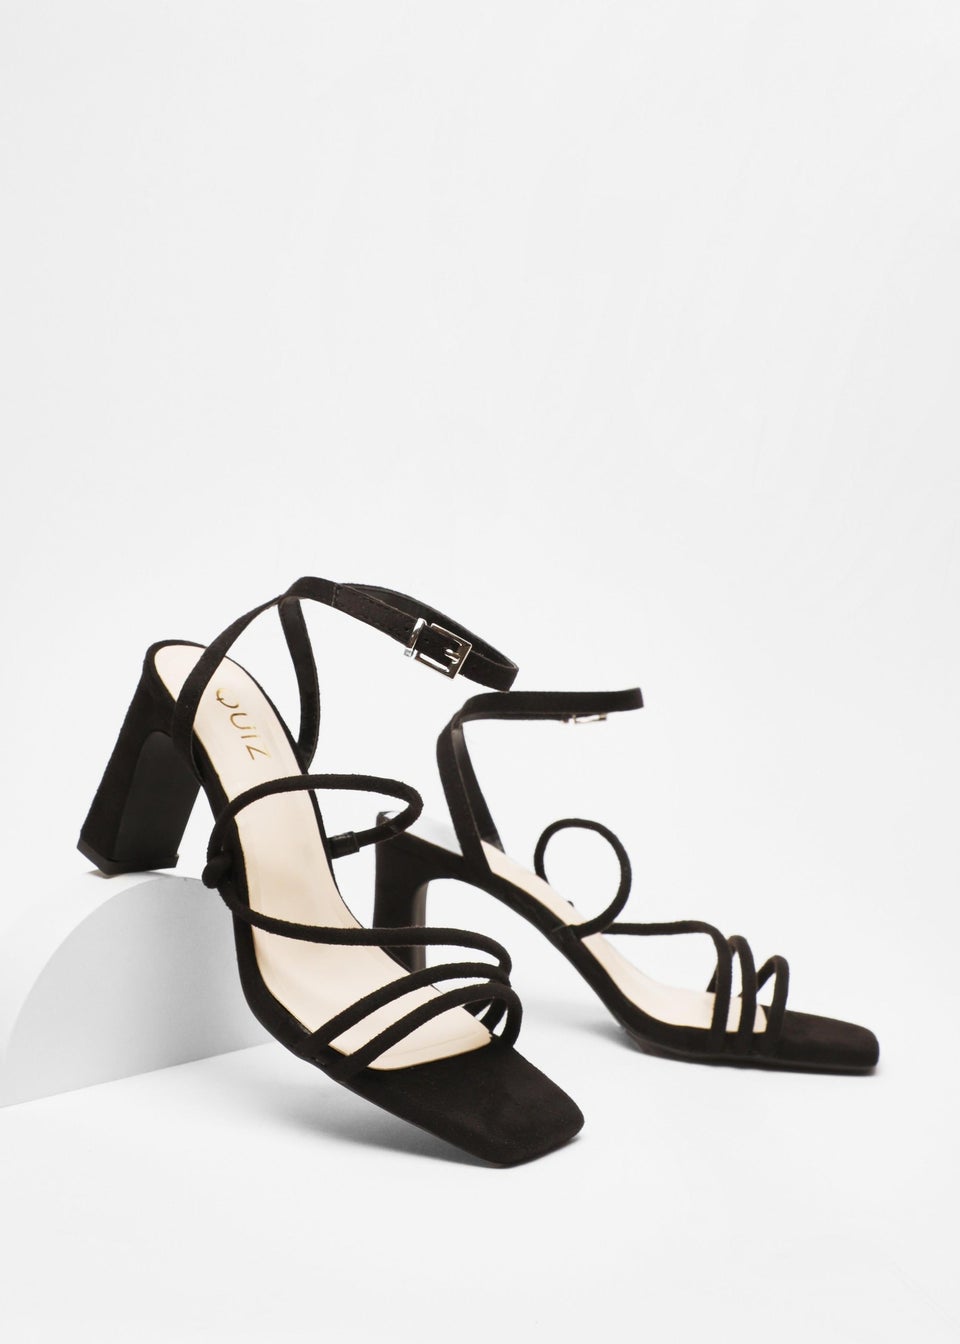 New Look Sandals SALE • Up to 50% discount • SuperSales UK